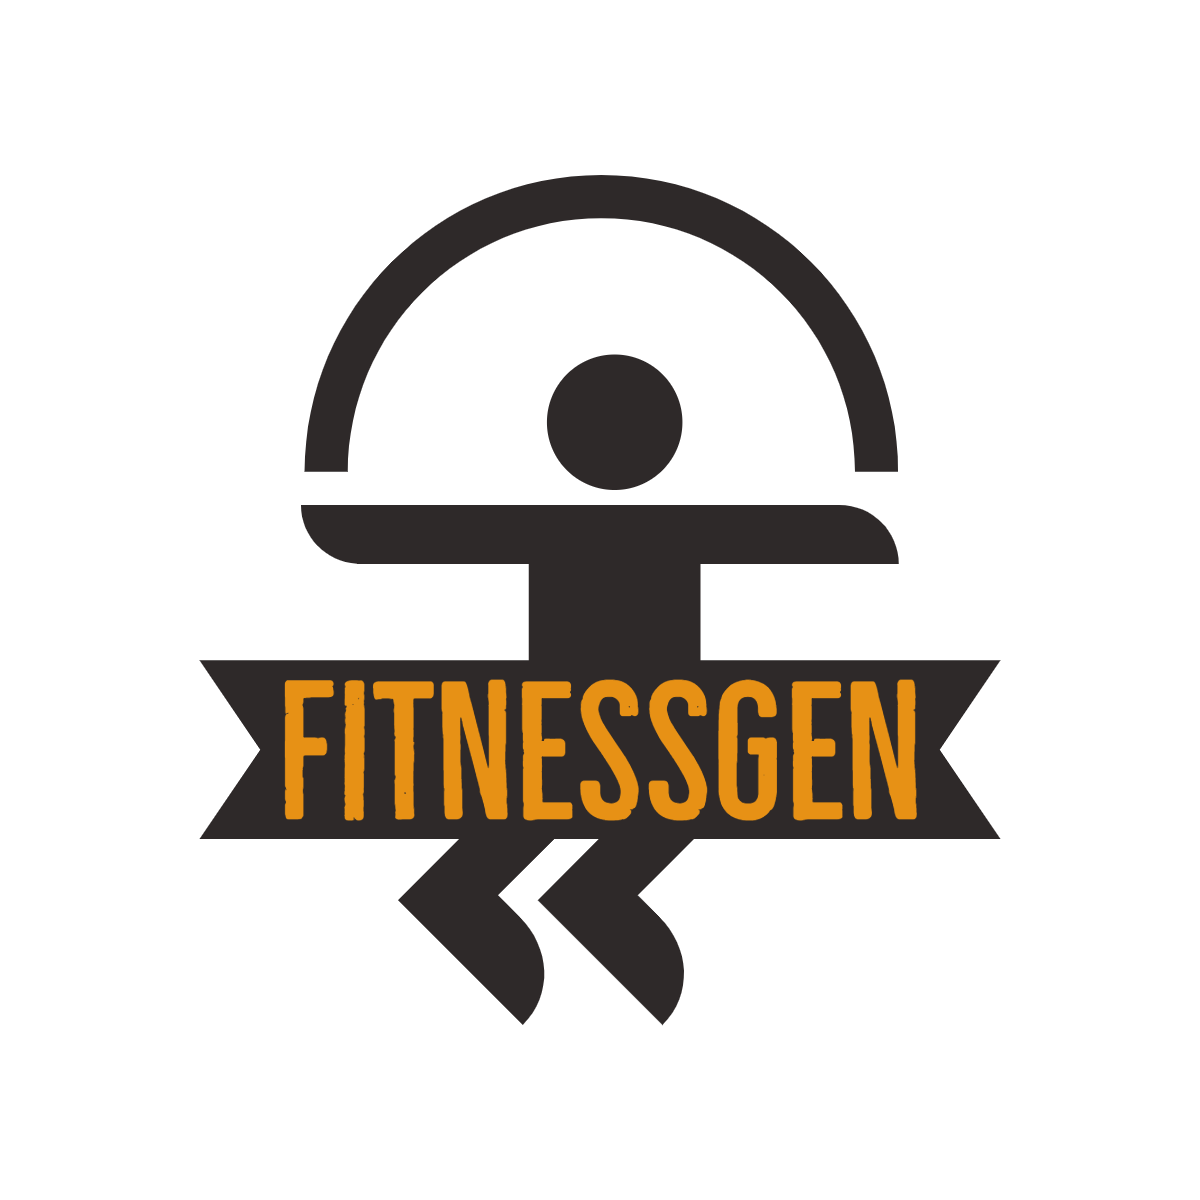 FitnessGen-logos_transparent.png